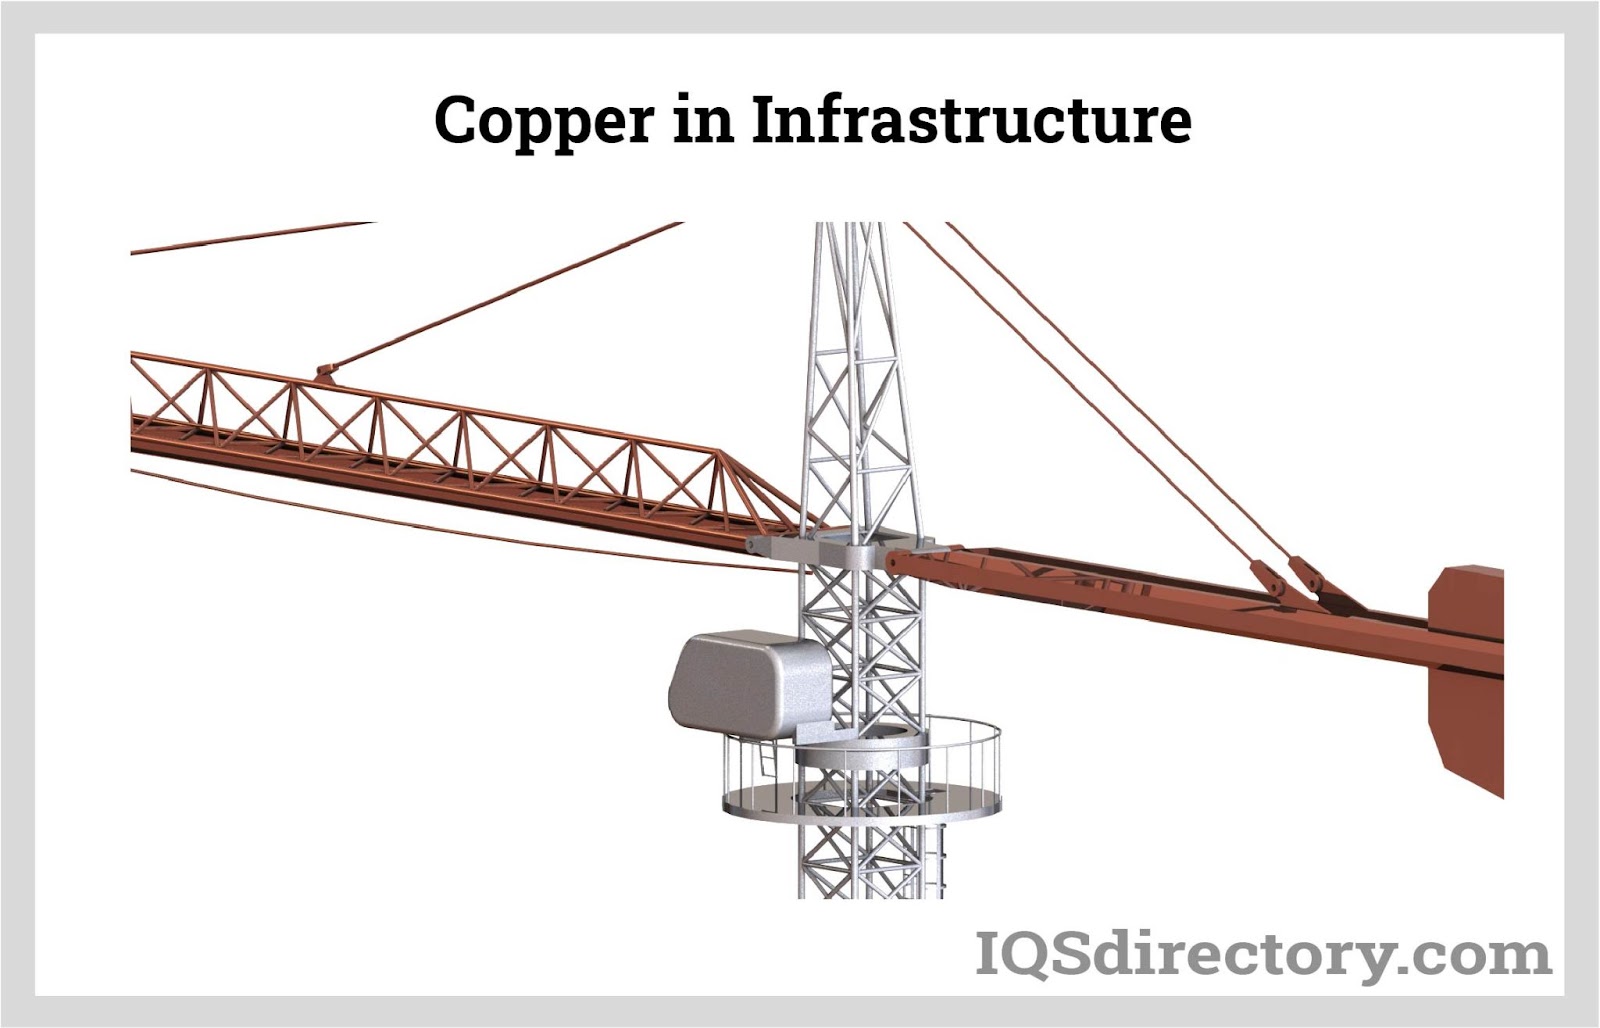 Copper in Infrastructure